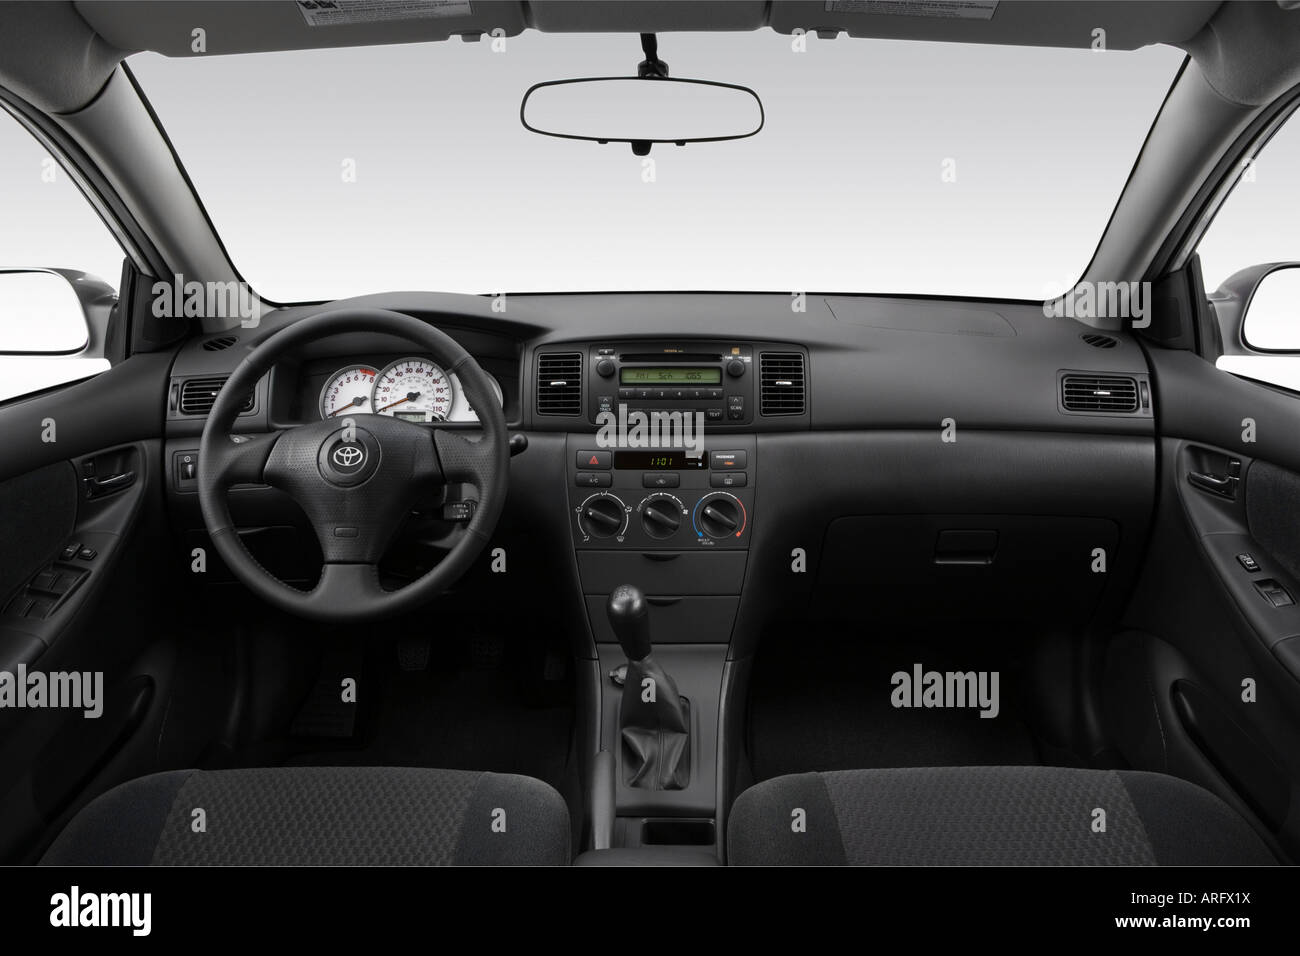 2008 Toyota Corolla S in Silver - Dashboard, center console, gear shifter  view Stock Photo - Alamy